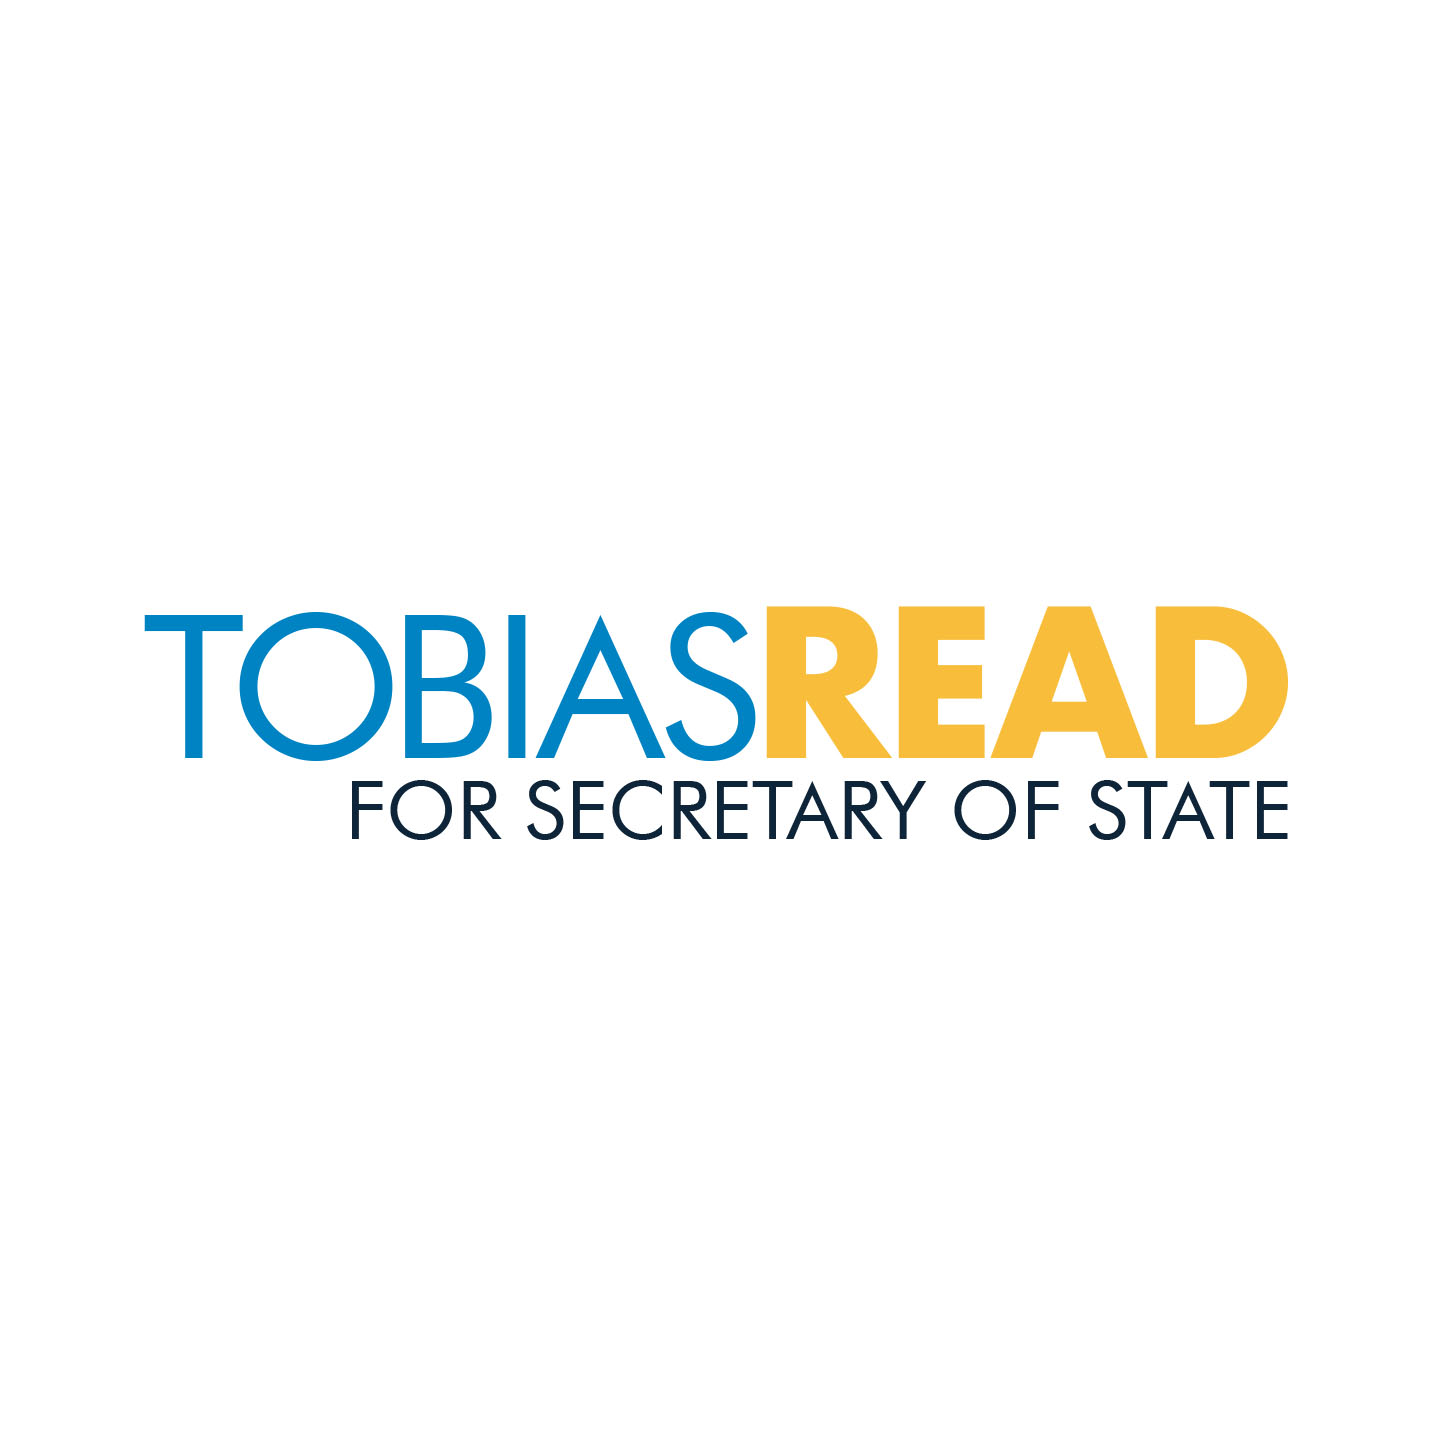 Tobias Read for Secretary Of State